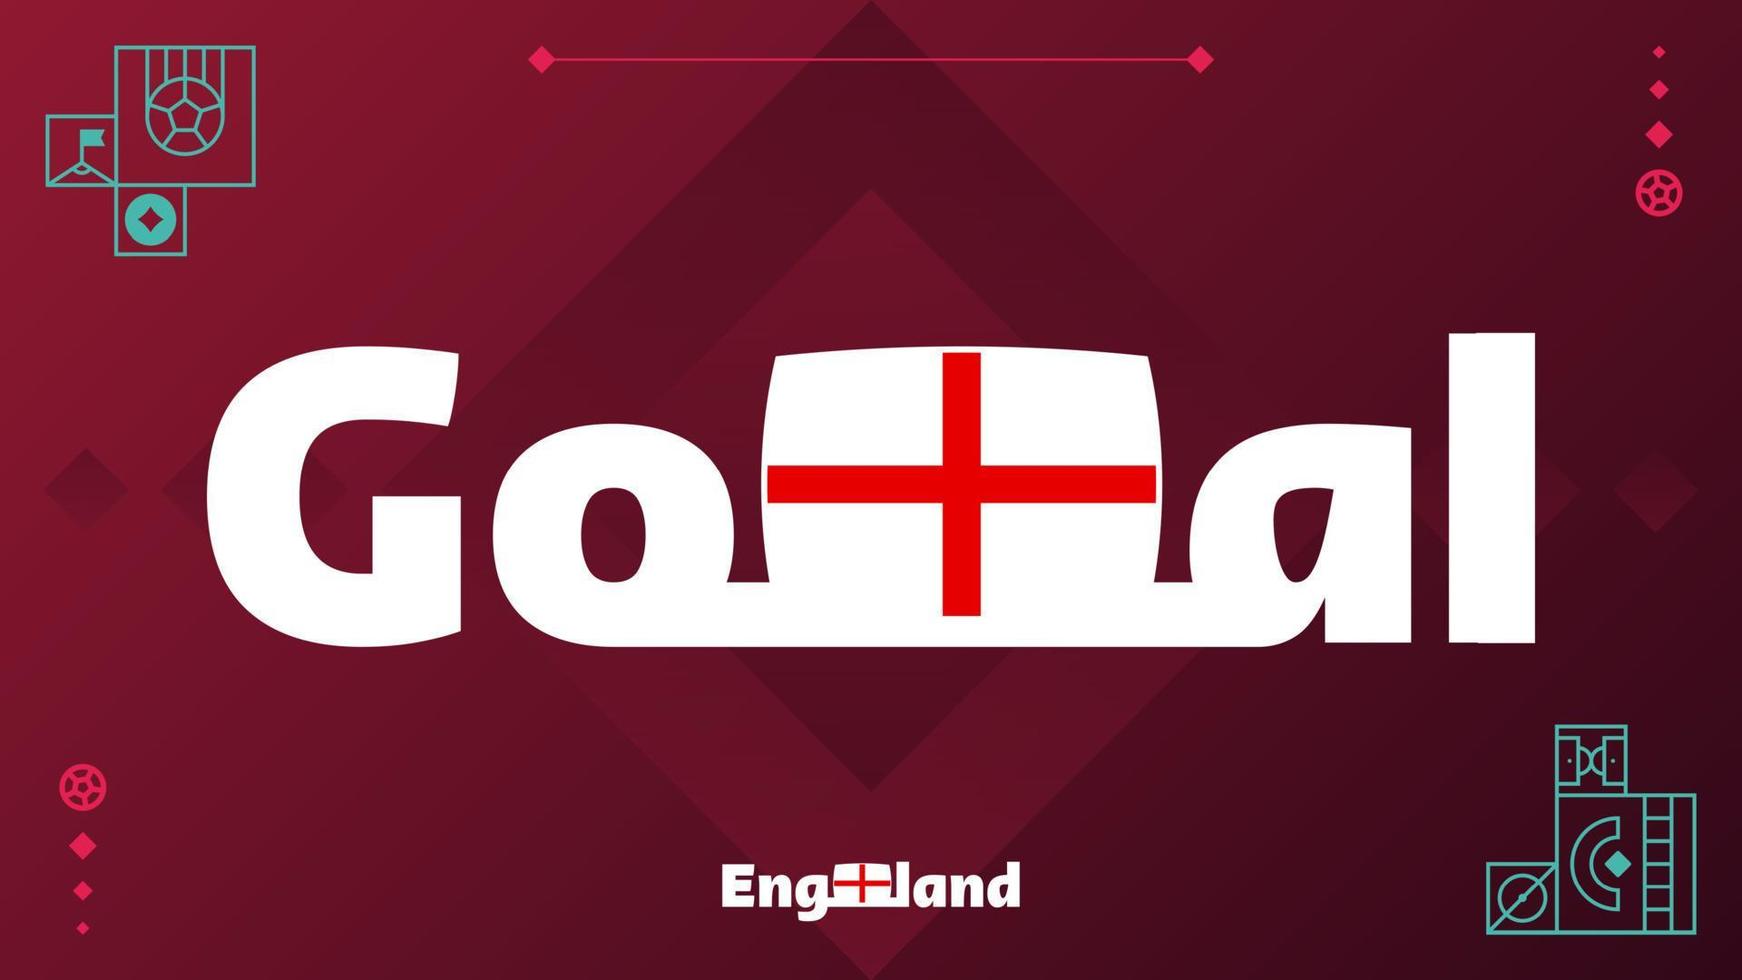 england flag with goal slogan on tournament background. World football 2022 Vector illustration